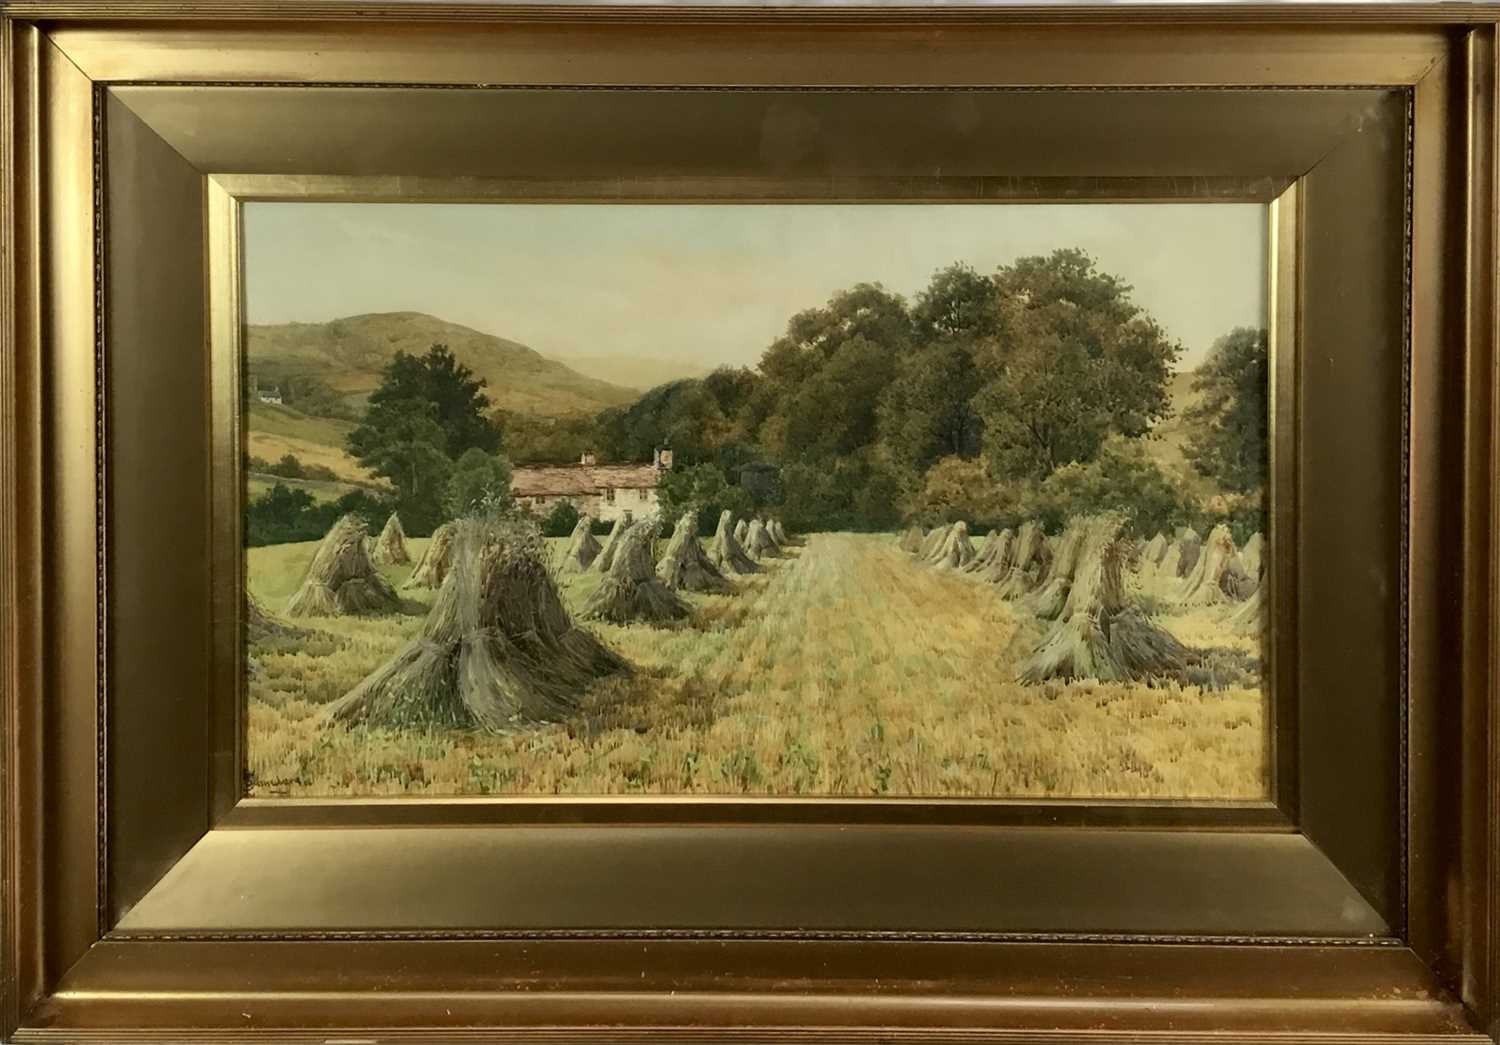 Charles L. Saunders (?-1915) watercolour - The Hay Stooks, signed, 44cm x 75cm, in glazed gilt frame